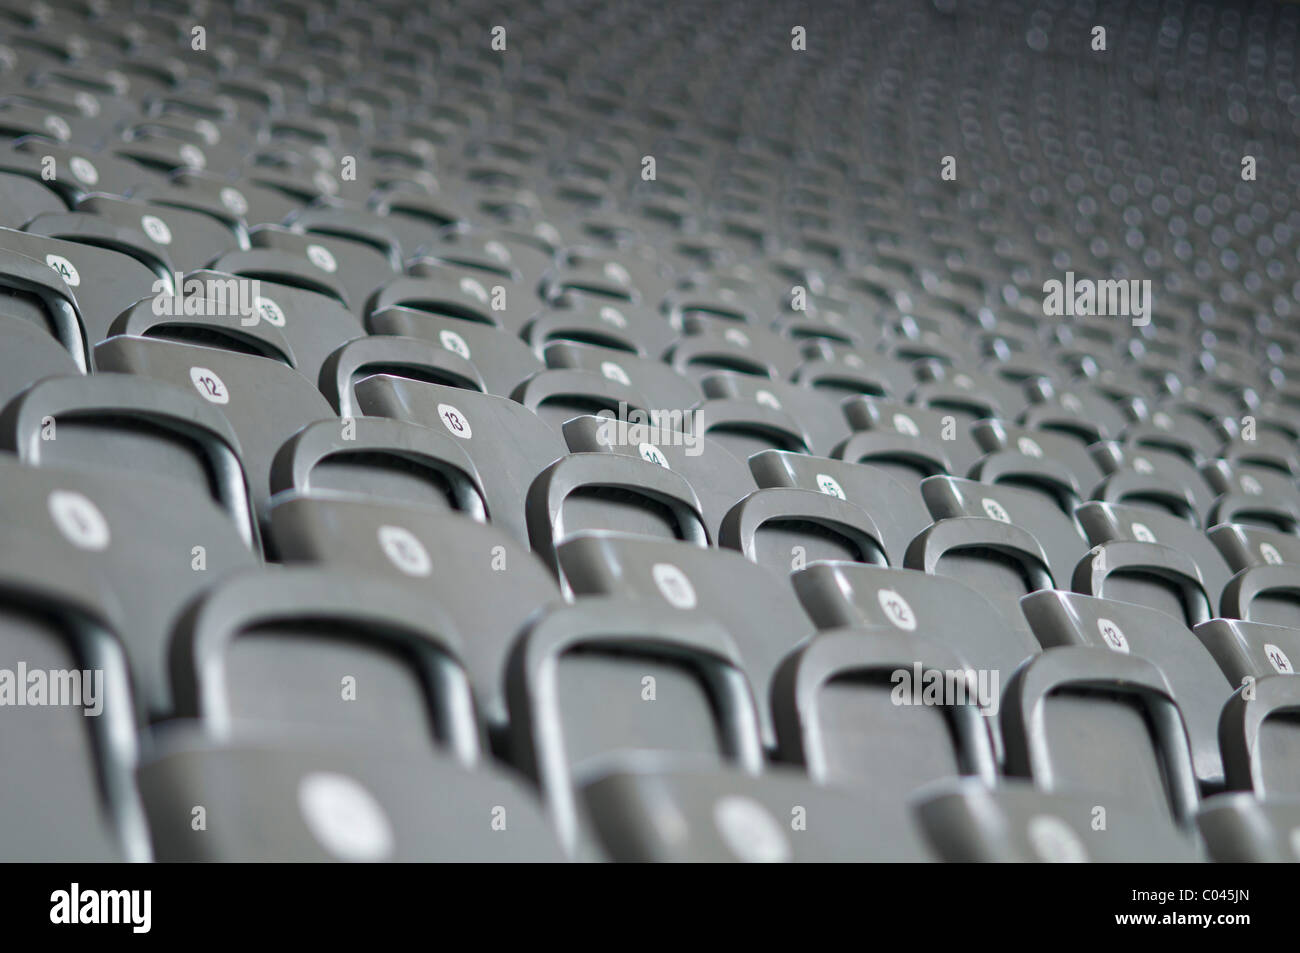 Des rangées de sièges du stade gris vide, le stade olympique (Olympiastadion), Berlin, Allemagne Banque D'Images